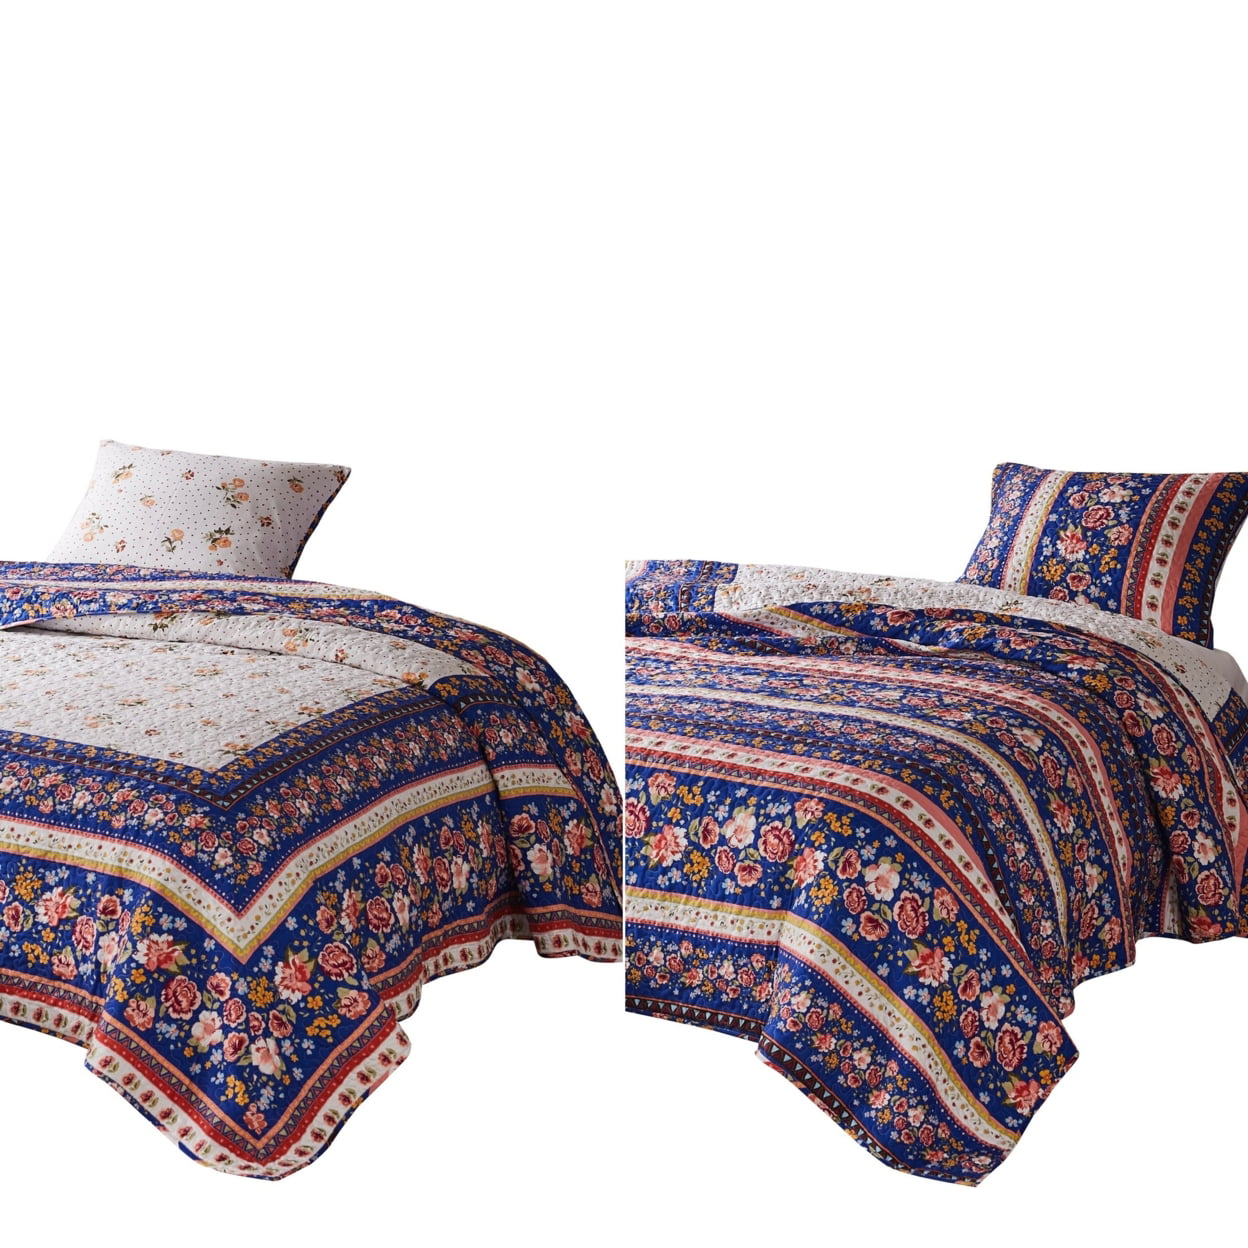 Picture of Benjara BM250977 Loir Twin Size Quilt Set with Floral Print, Multi Color - 2 Piece